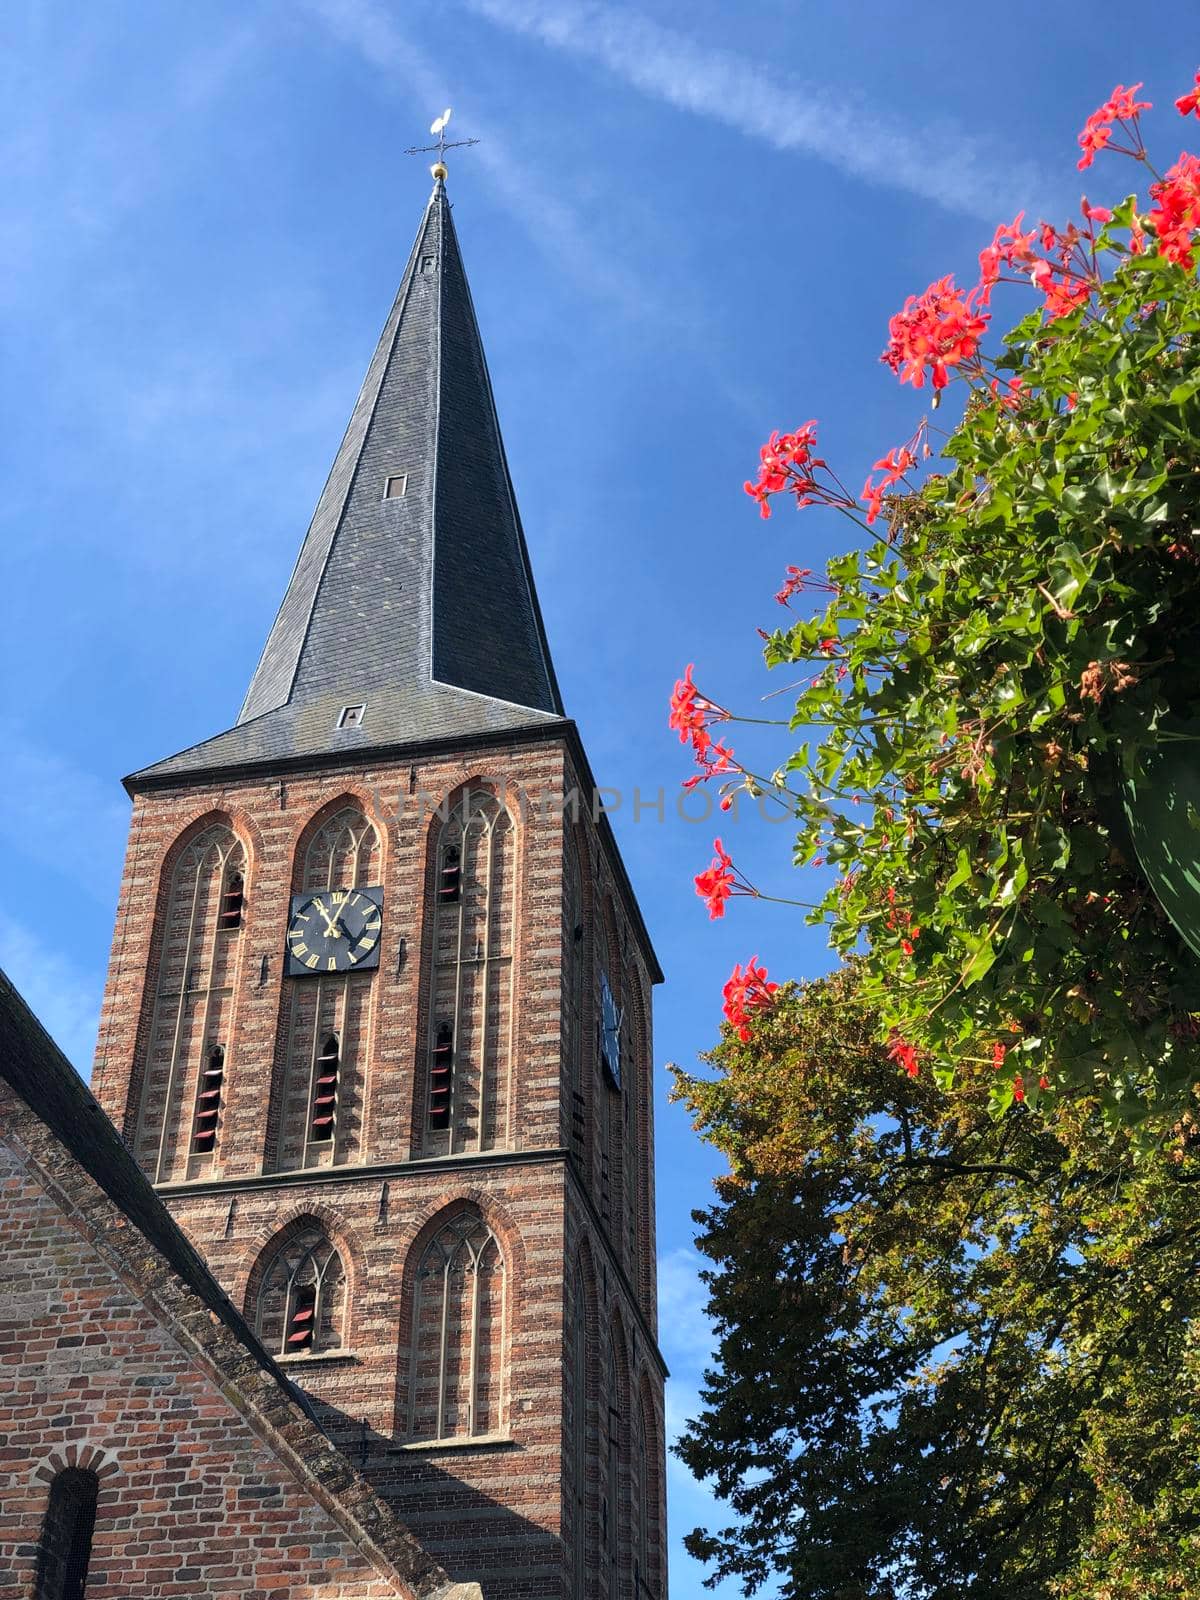 Remigius church in Hengelo Gelderland, The Netherlands